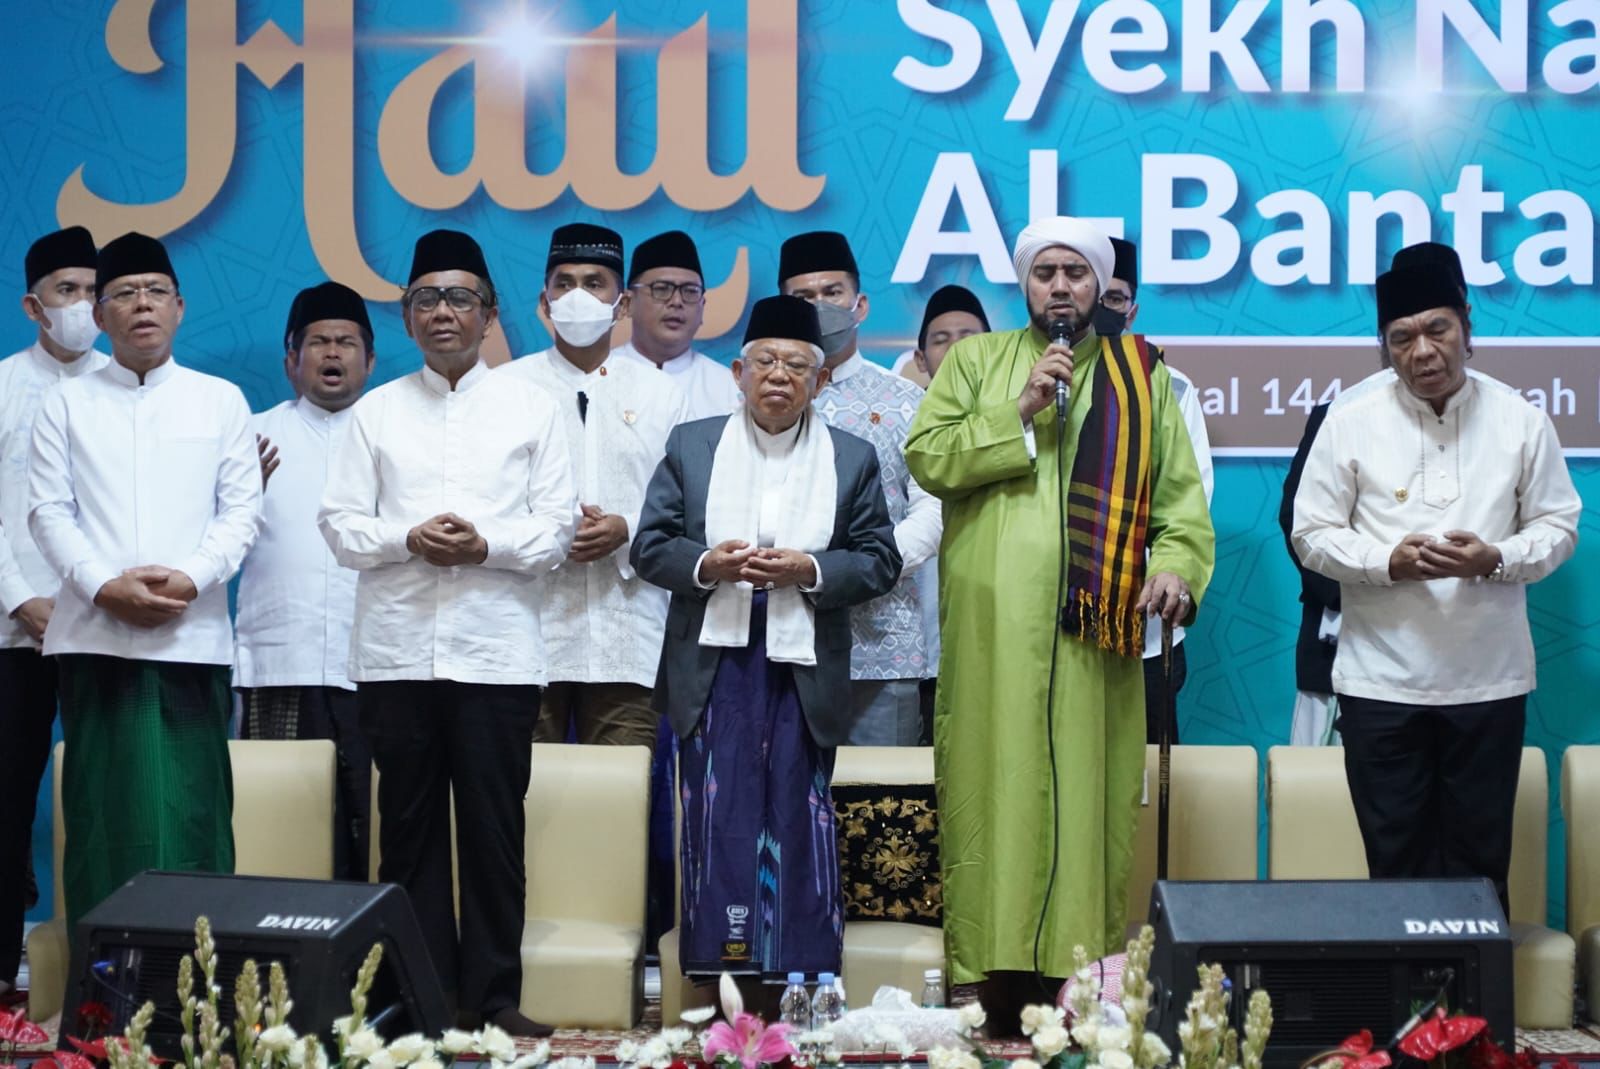 Kemenpora Harap Pemuda Indonesia Teladani Syekh Nawawi Al Bantani